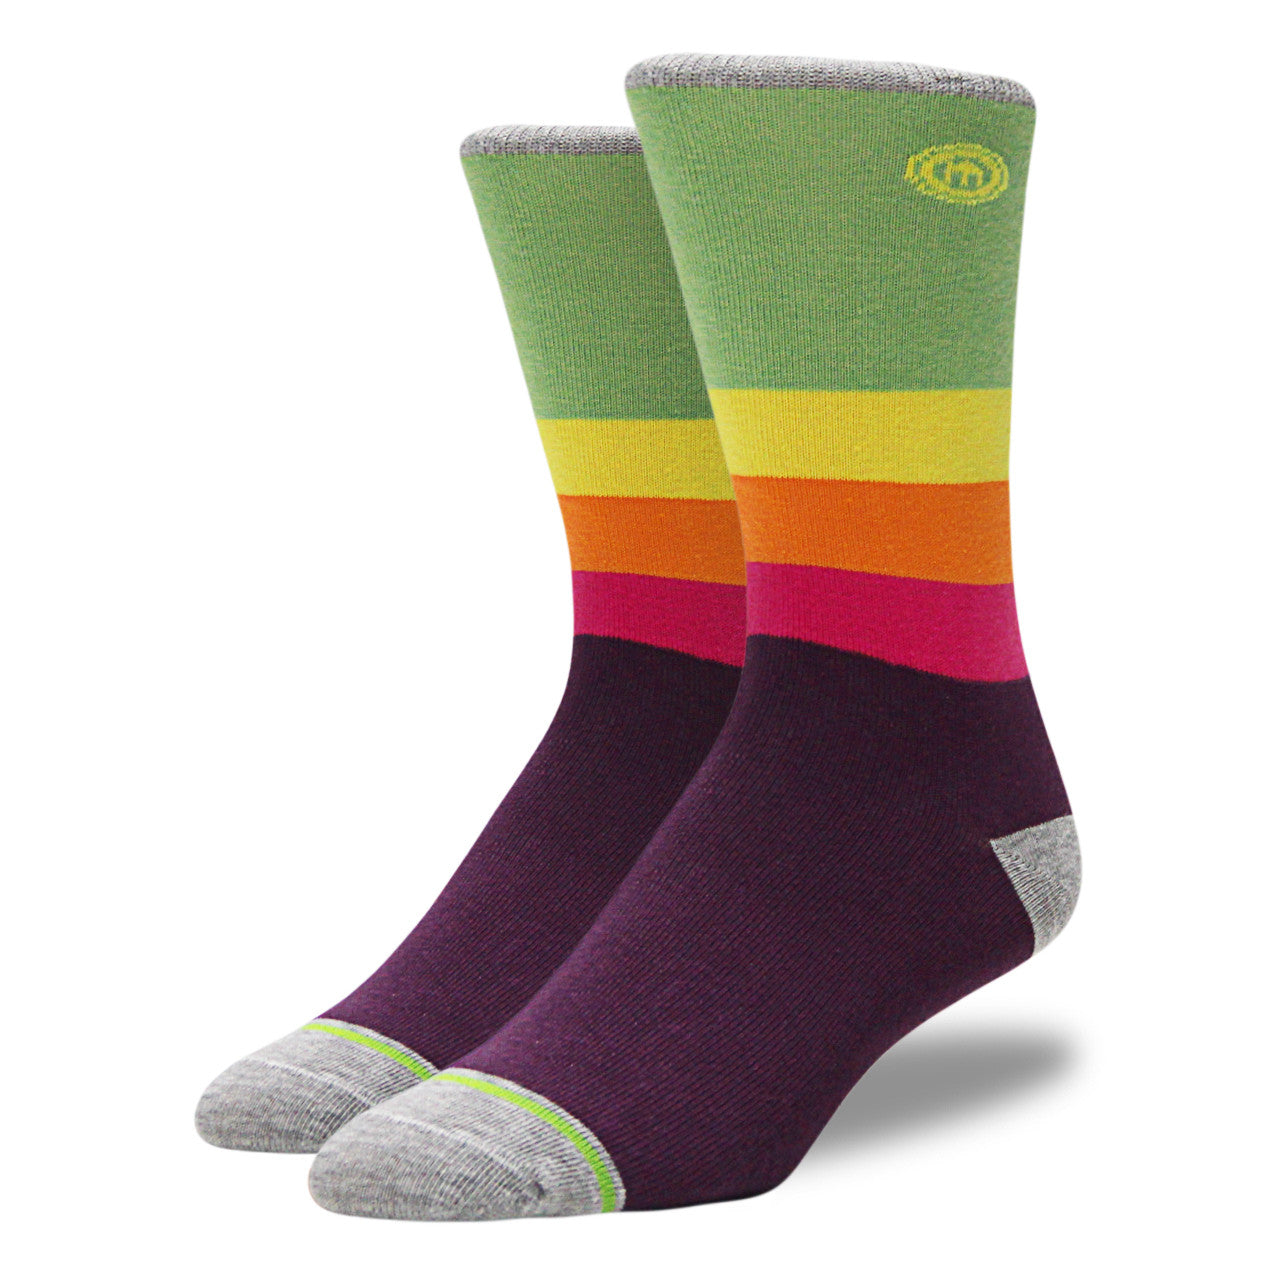 The Joy - Men's Rainbow Striped Socks